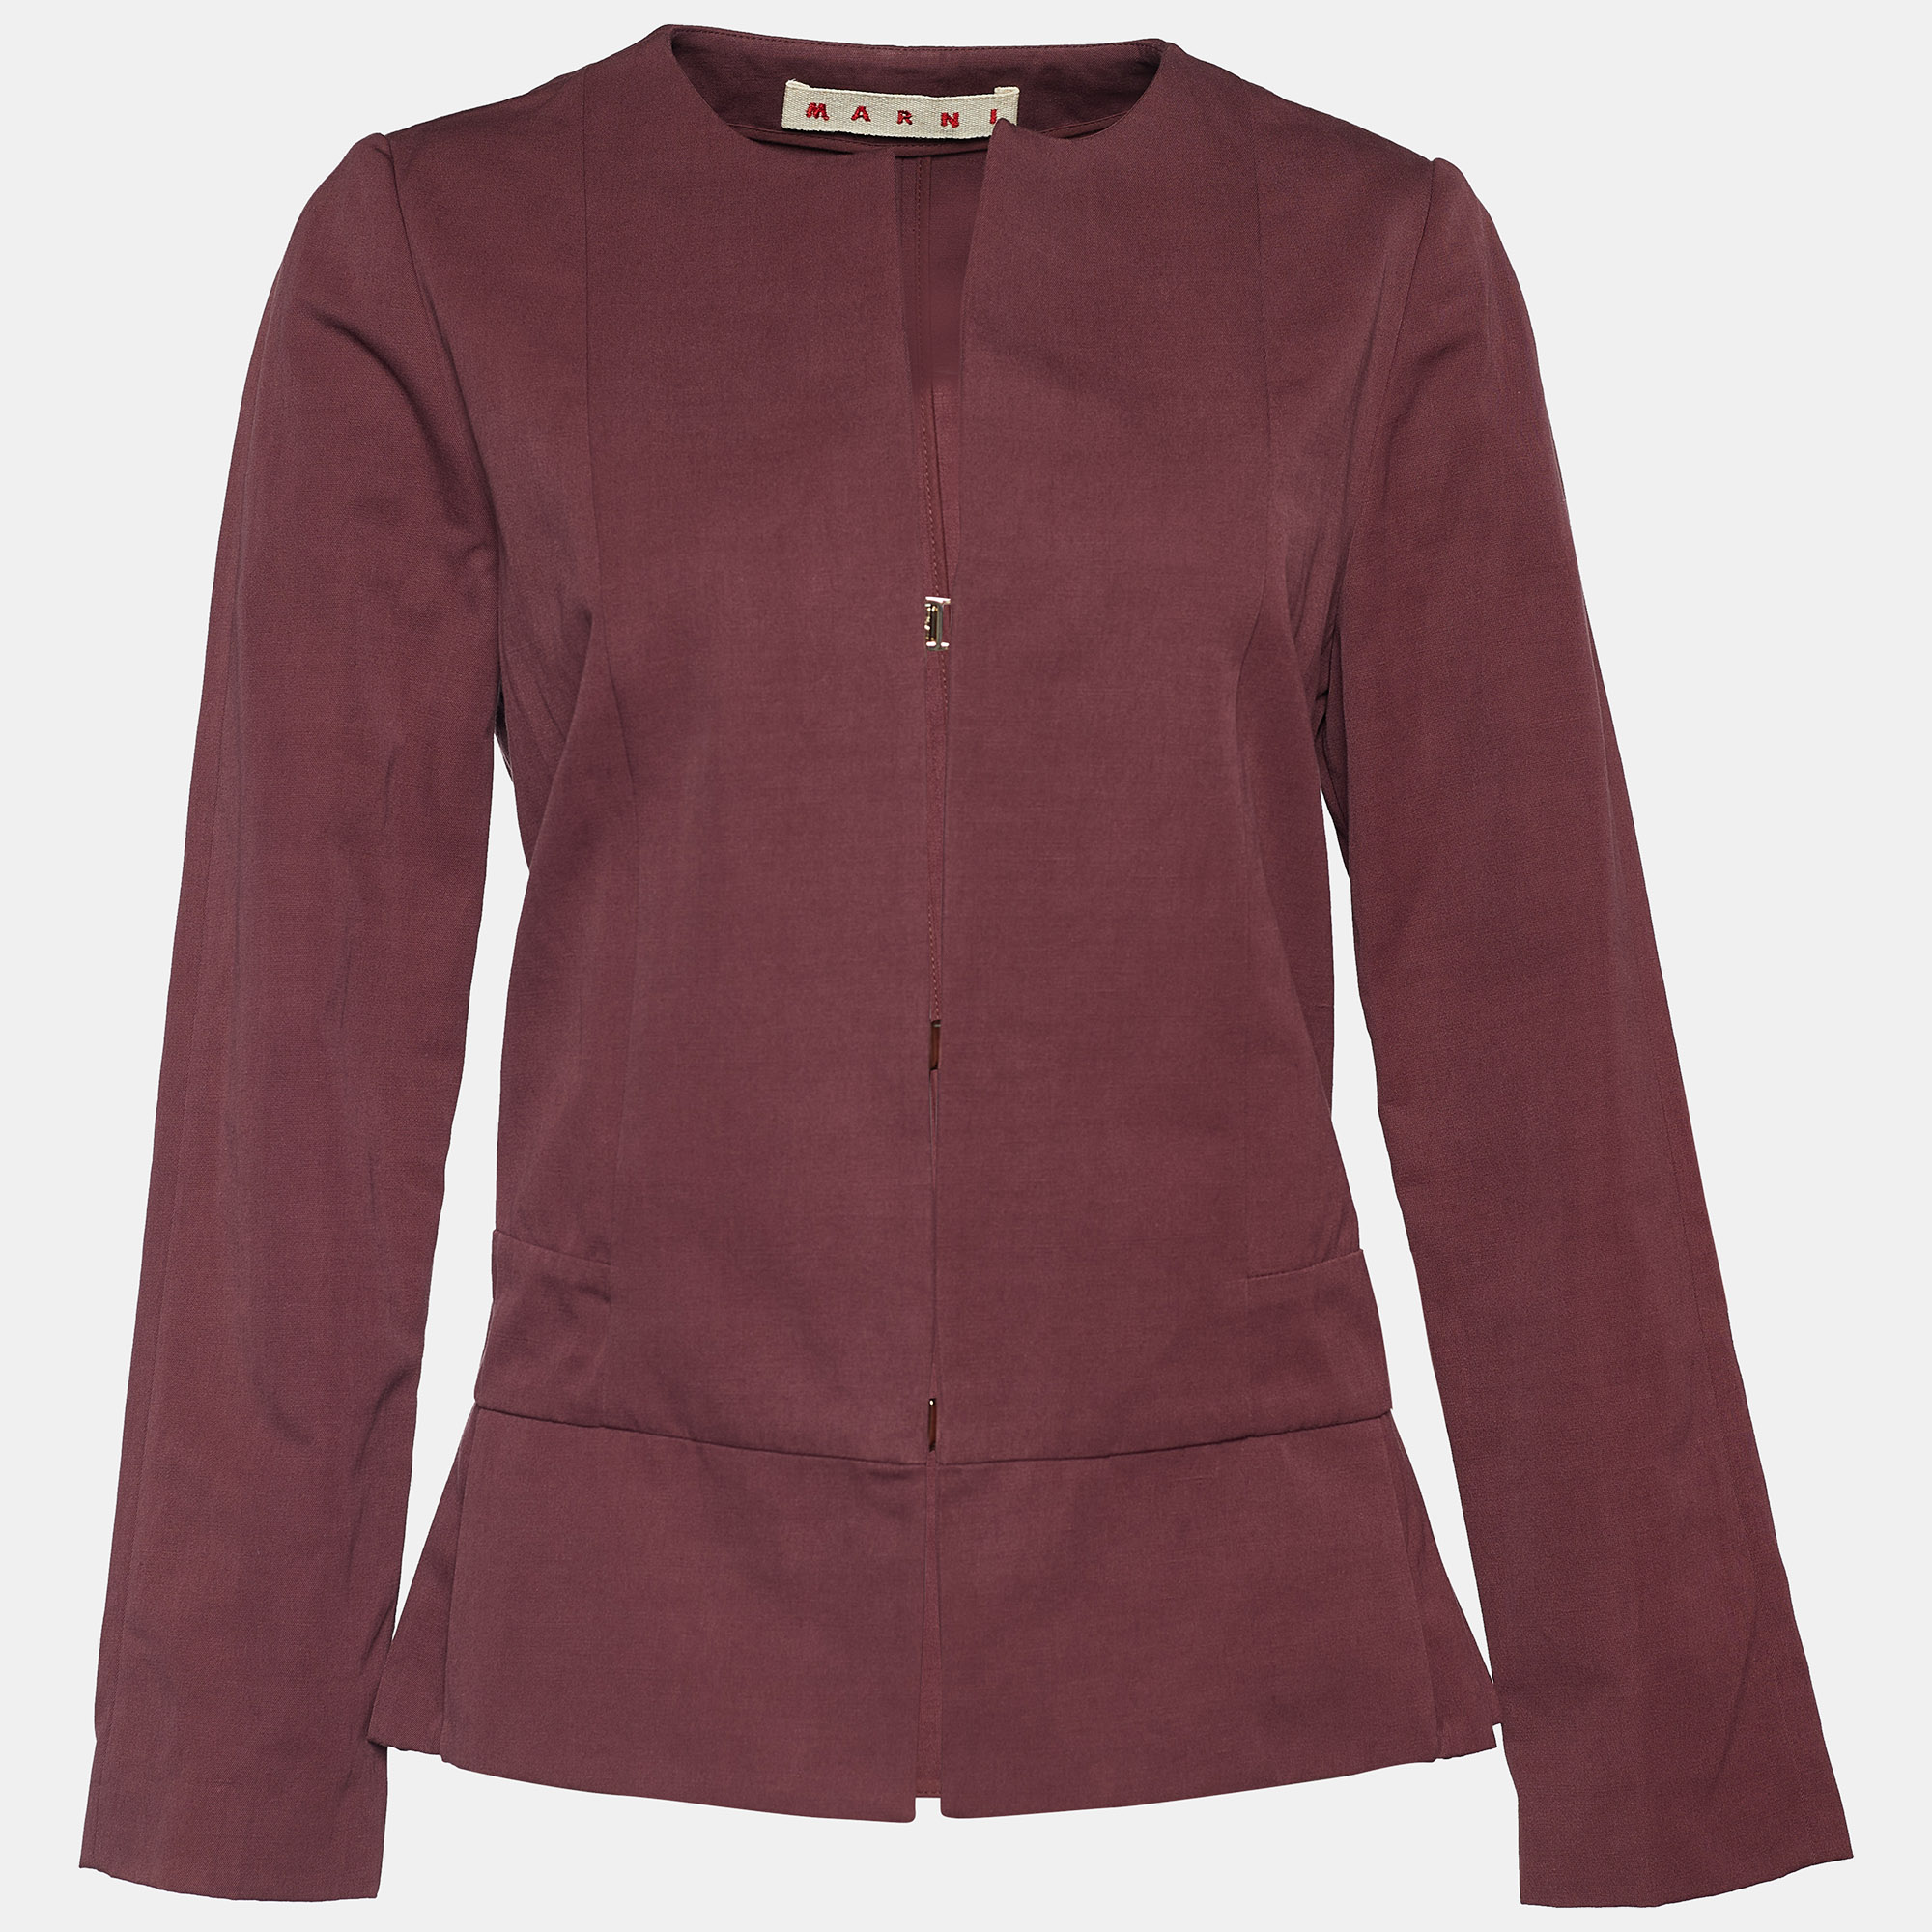 Marni burgundy cotton & linen peplum jacket m